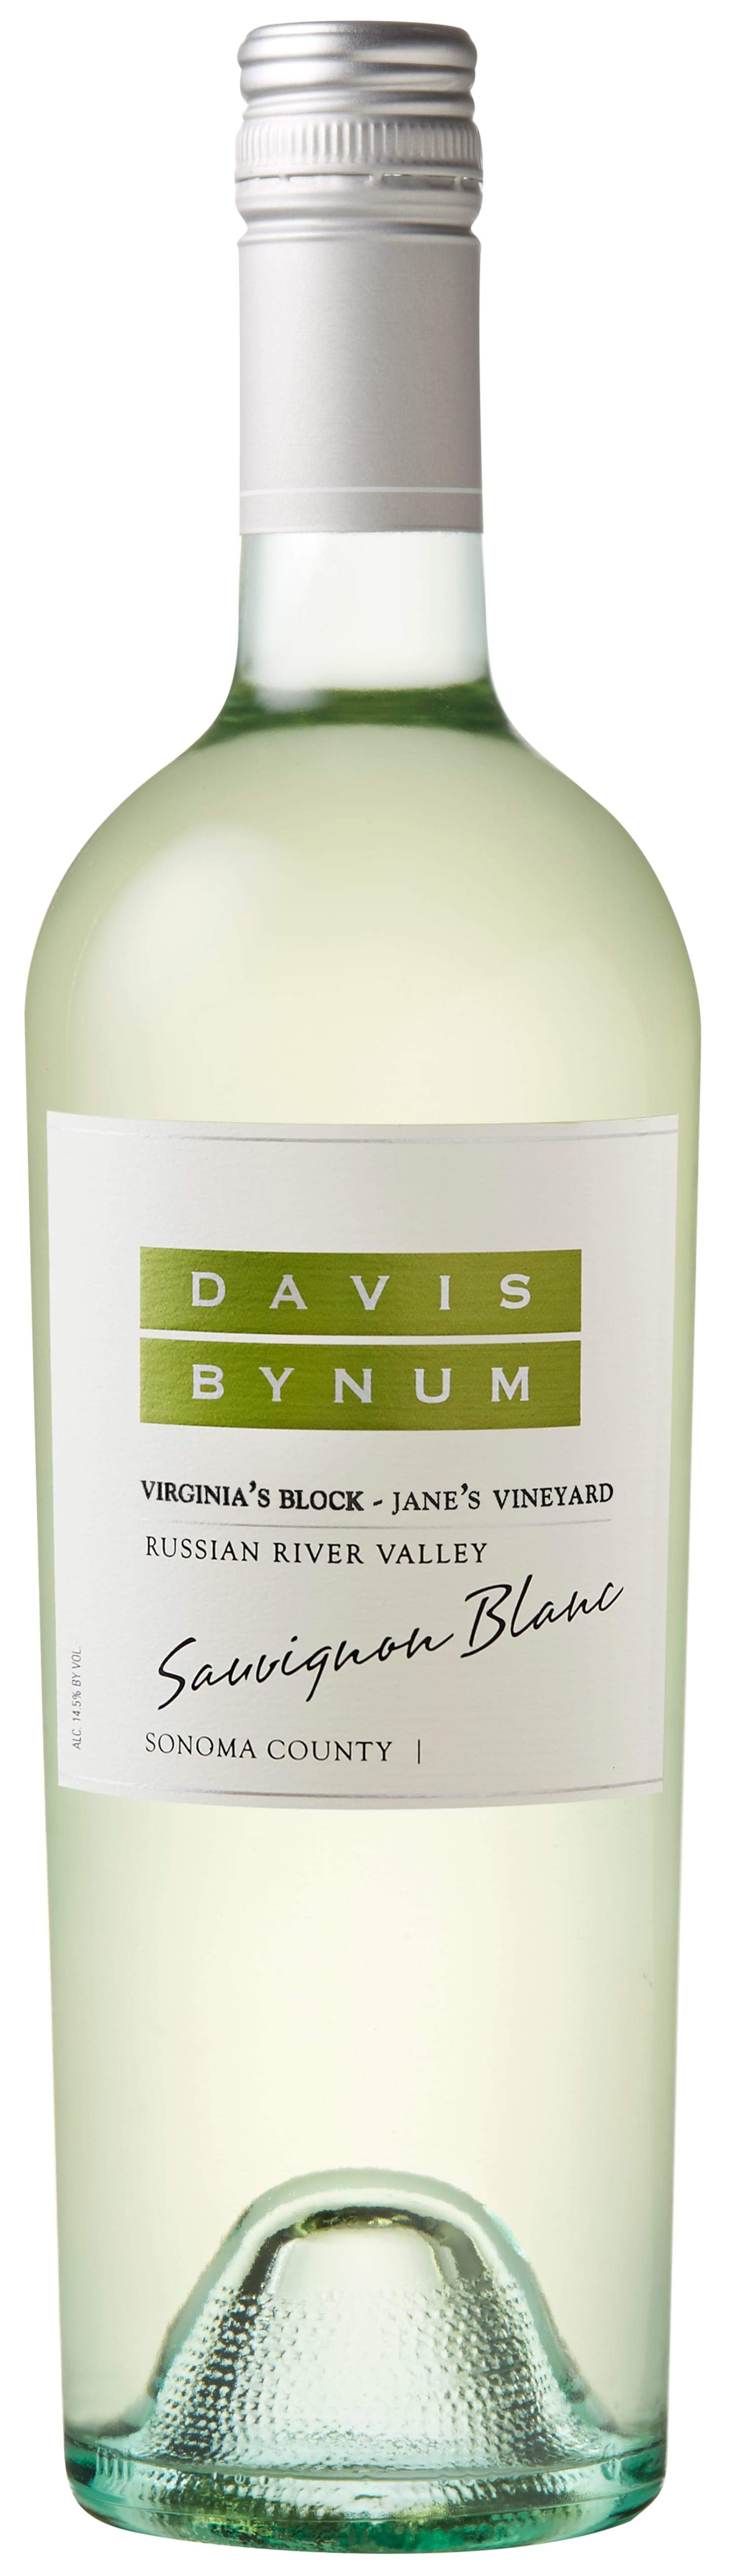 Davis Bynum Sauvignon Blanc Virginia's Block 2017